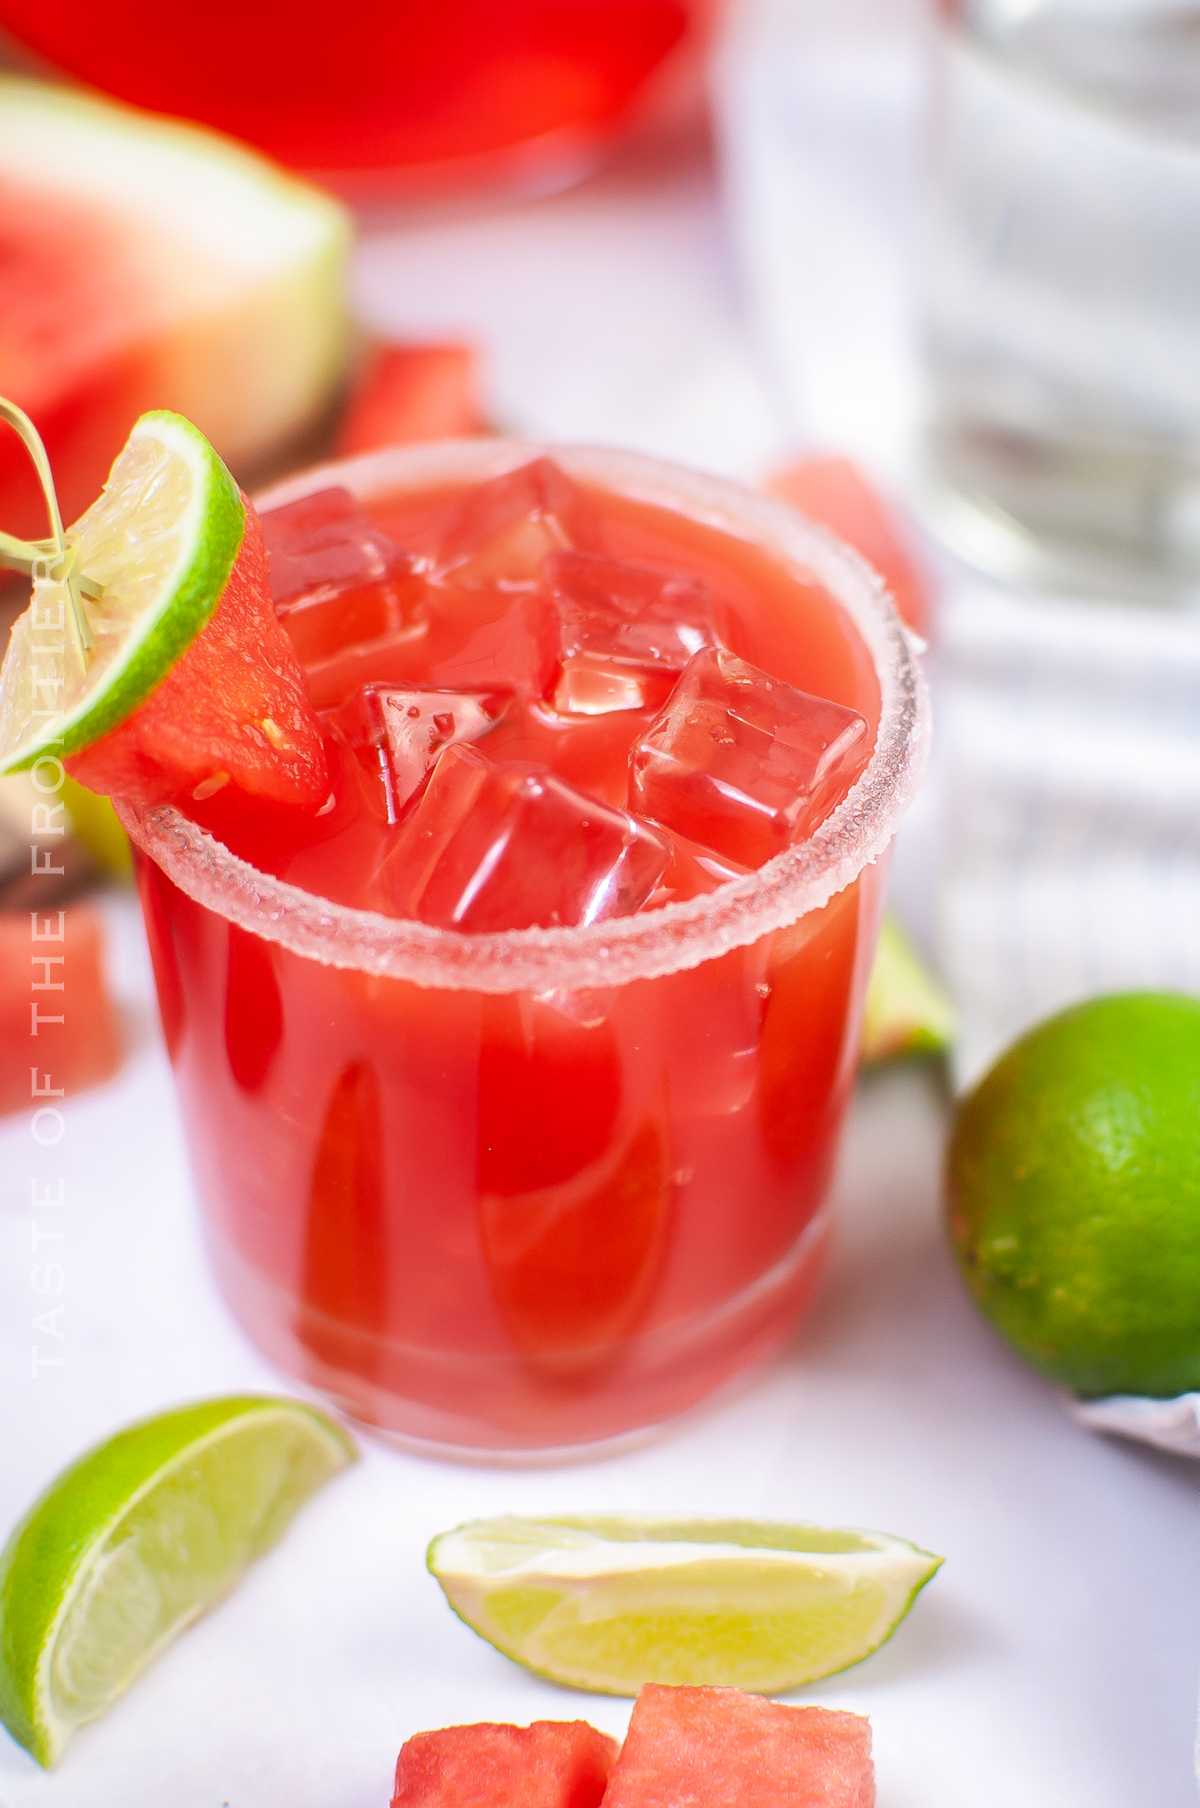 Watermelon Lime Cocktail